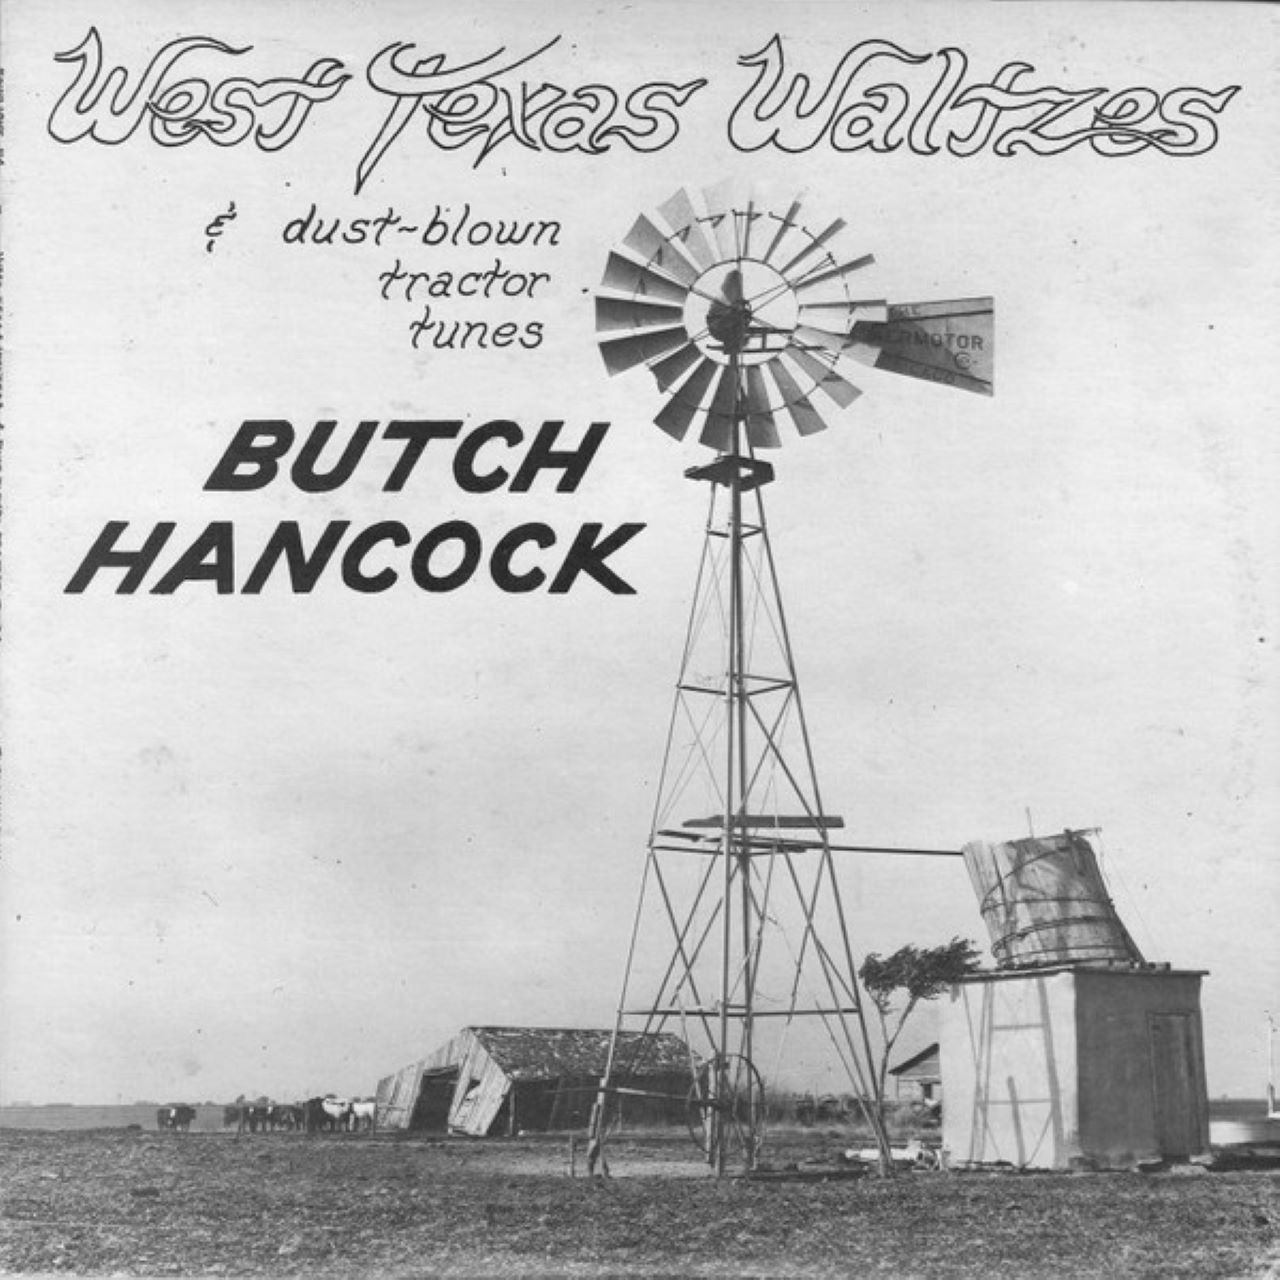 Butch Hancock - West Texas Waltzes cover album